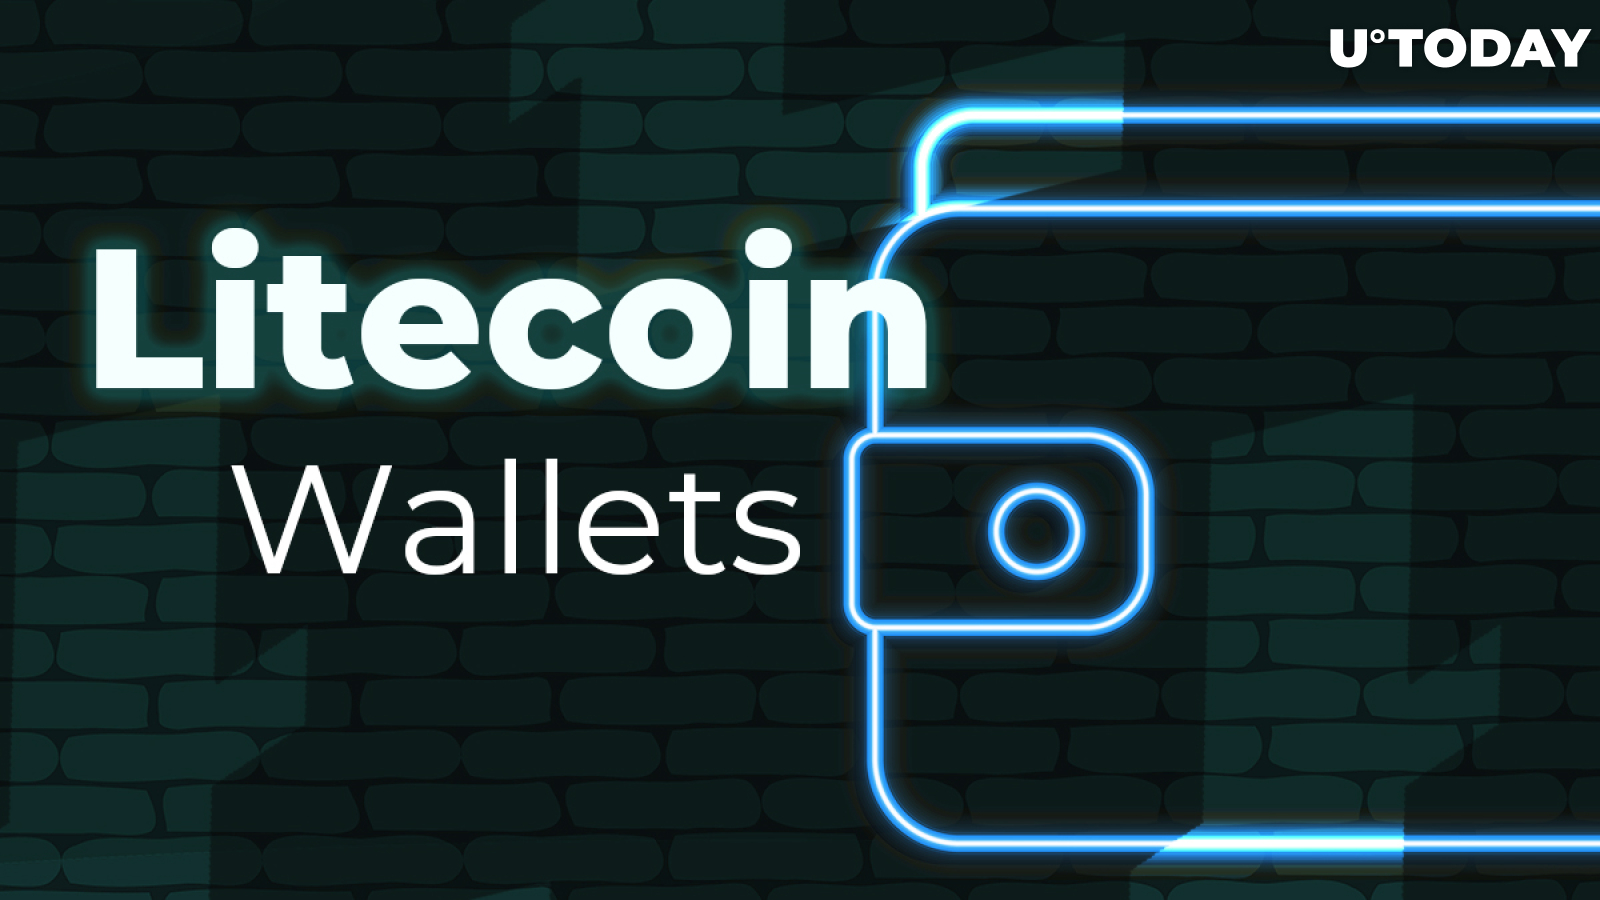 The Best Litecoin Wallets 2019